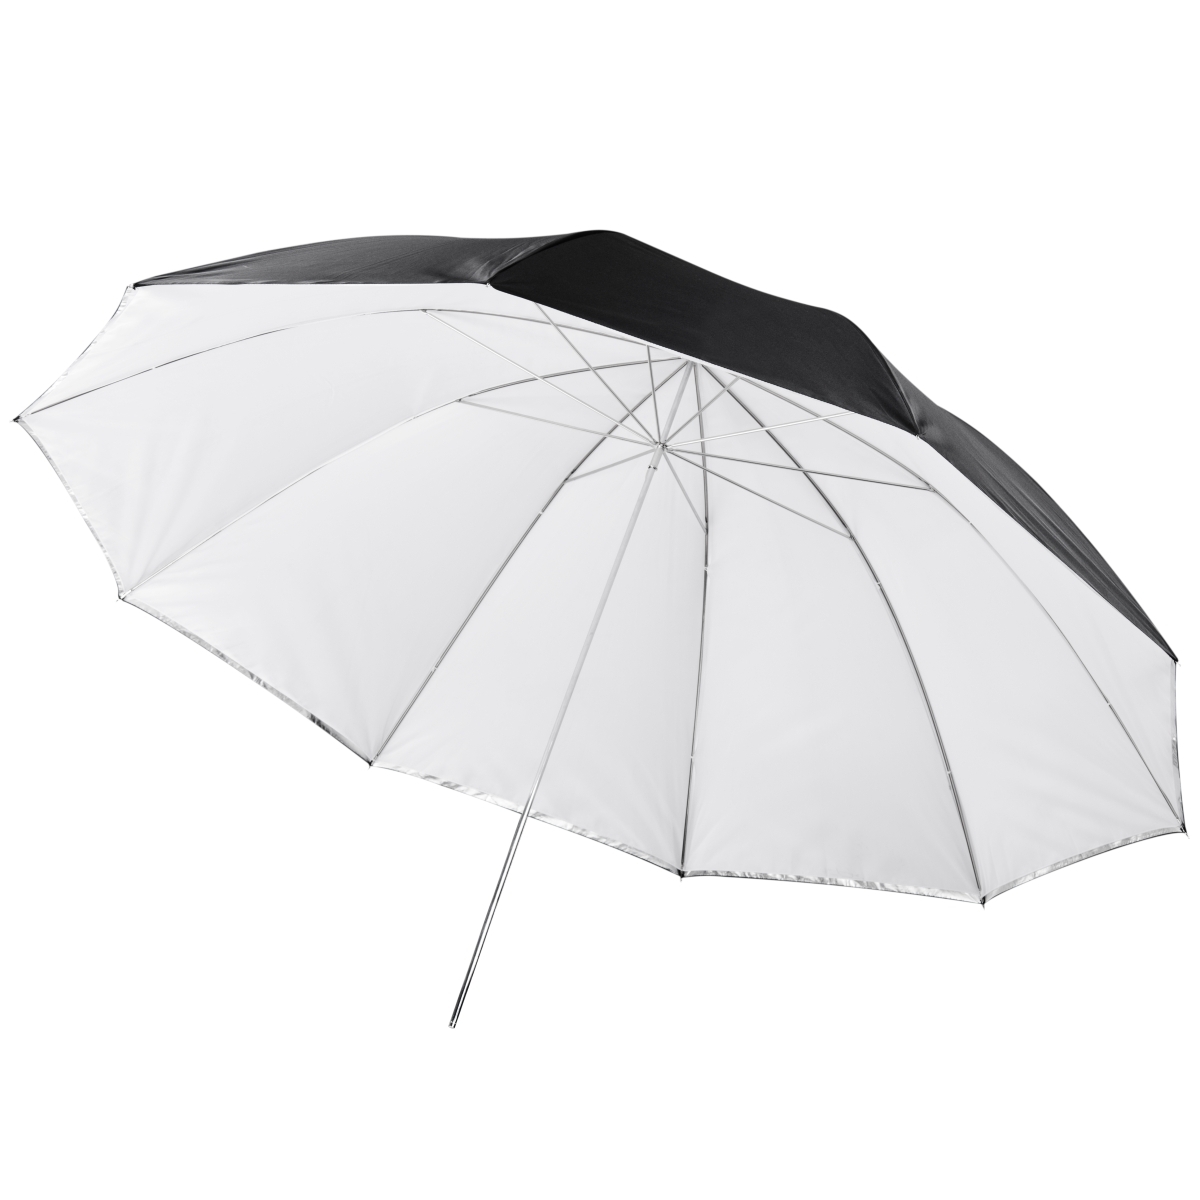 Walimex 2in1 Reflex & Transl. Umbrella white 150cm